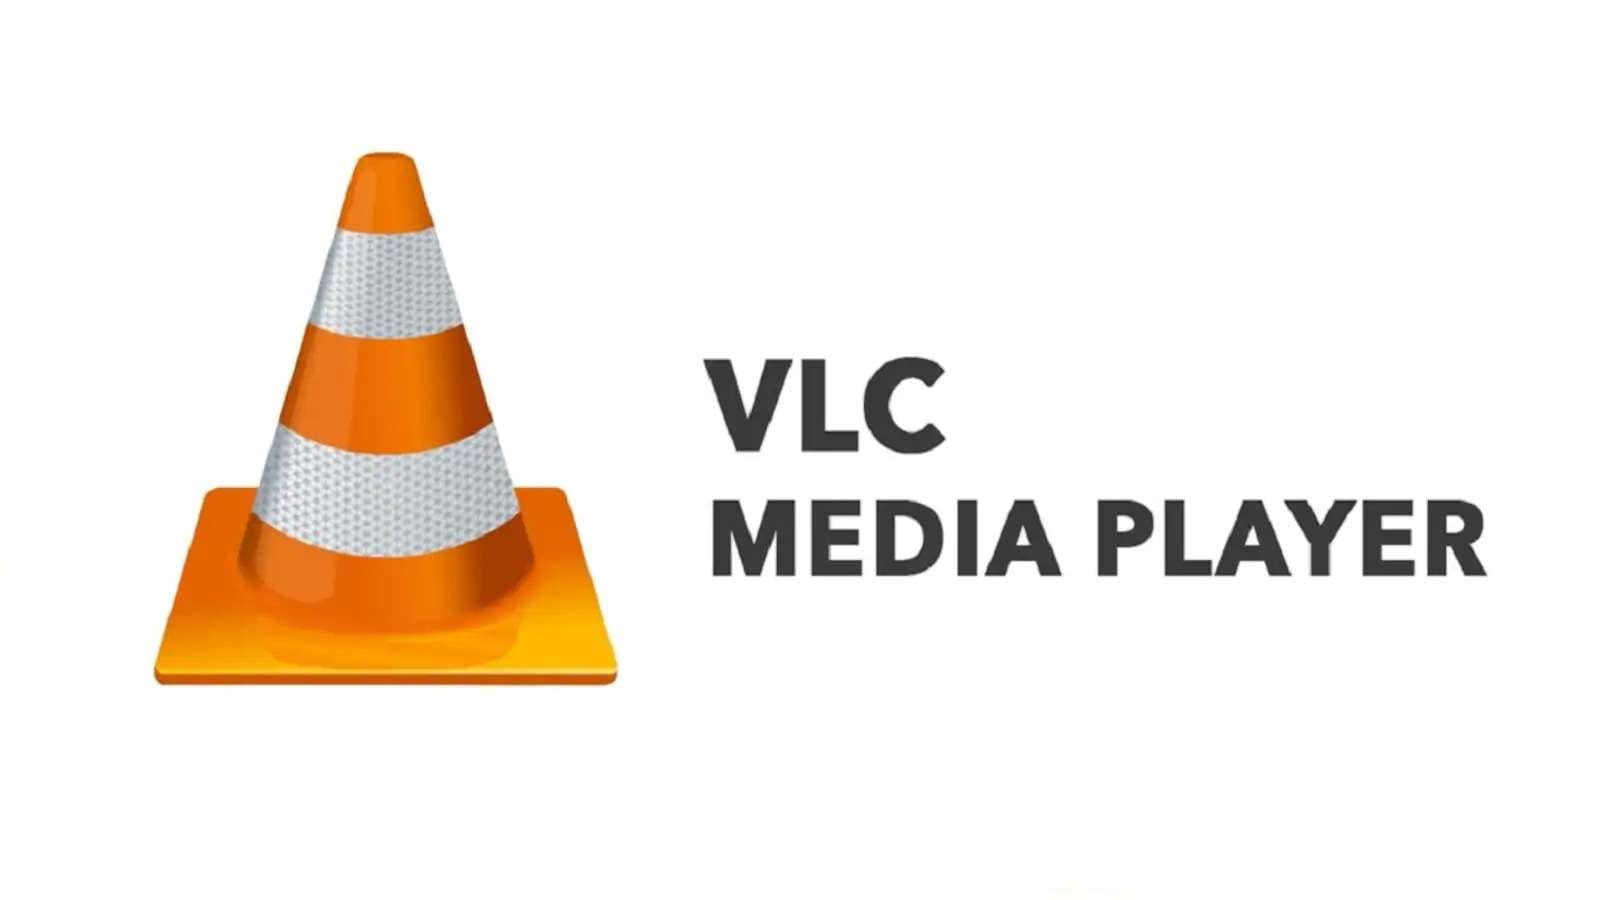 vlc media player logo